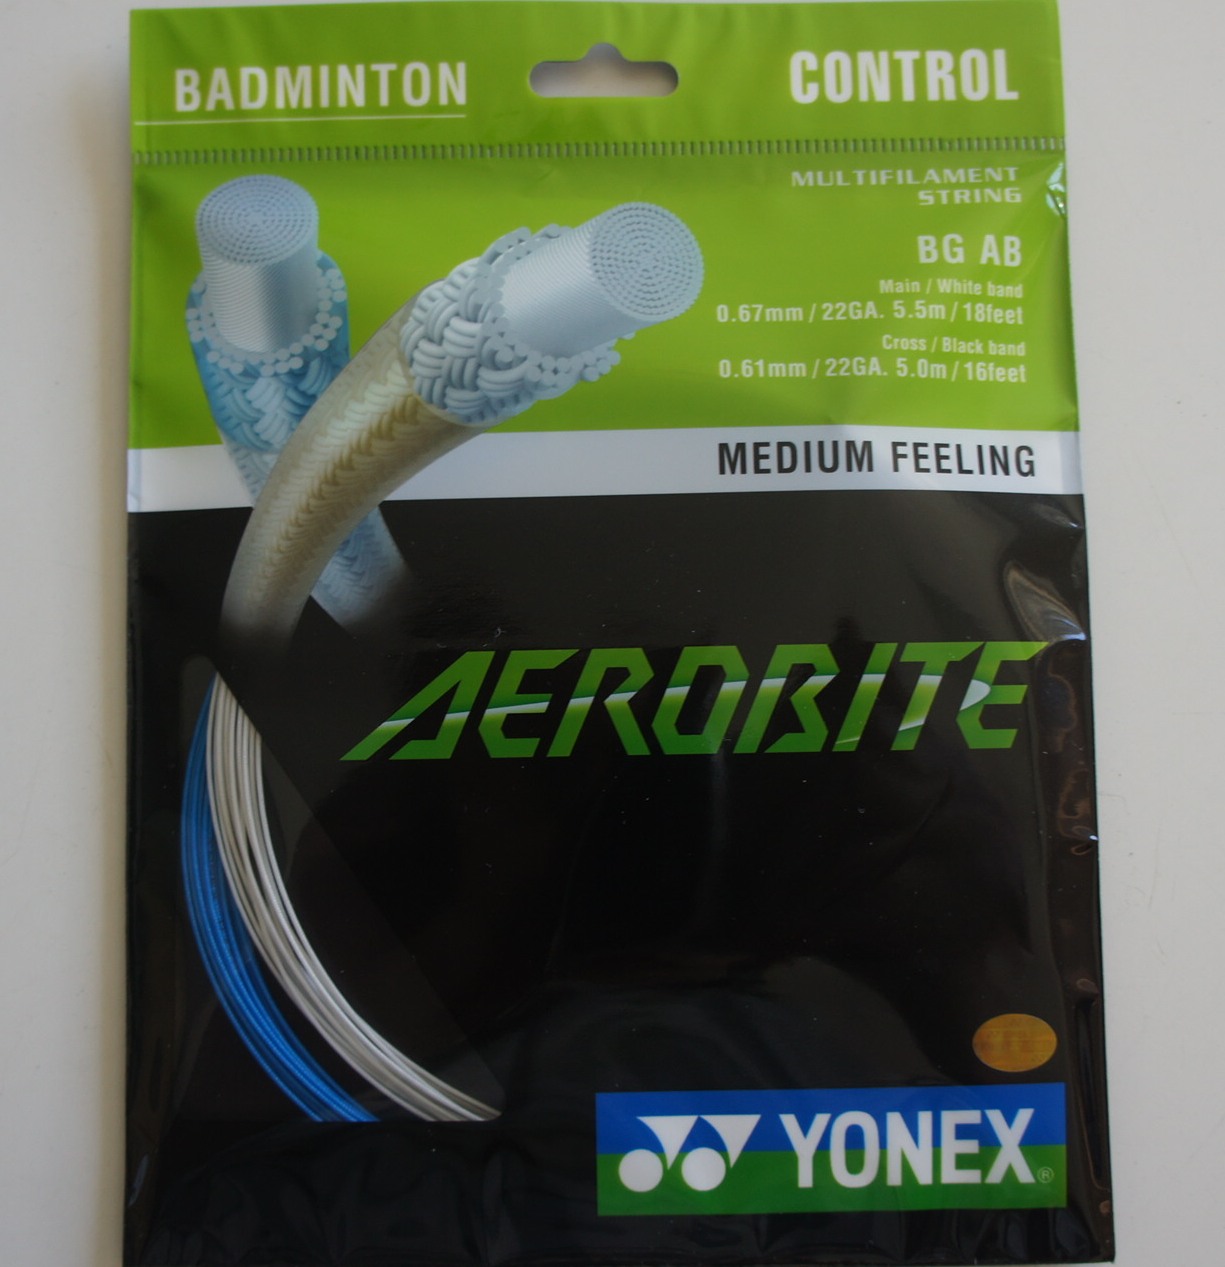 YONEX BG AB Aerobite Badminton String (5 Packs), Blue/White